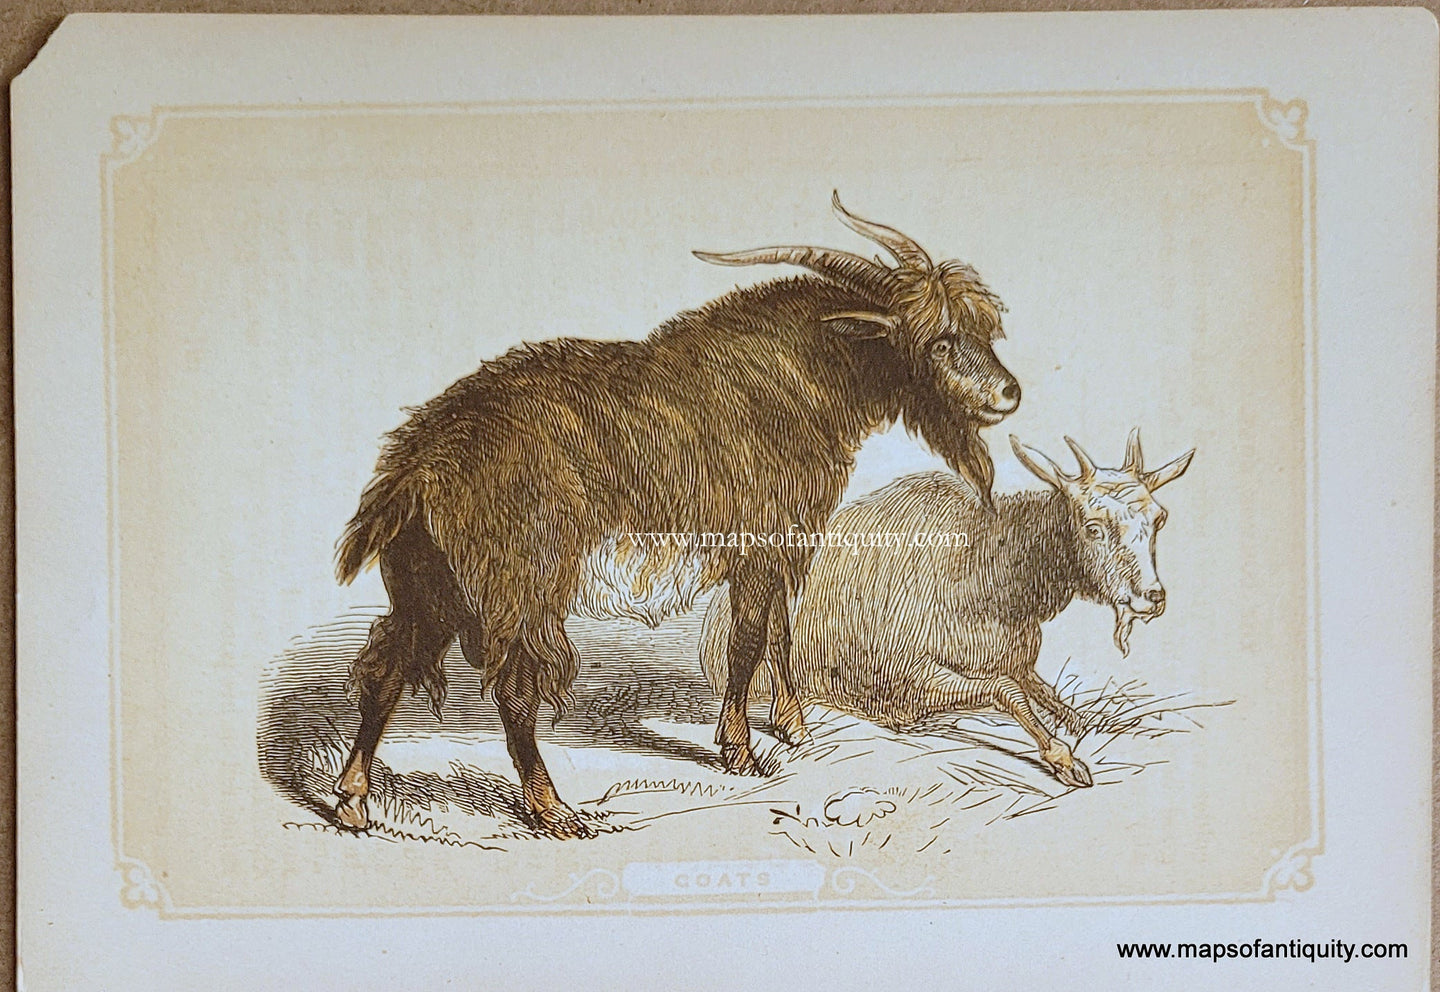 Genuine-Antique-Print-Goats-1850s-Tallis-Maps-Of-Antiquity